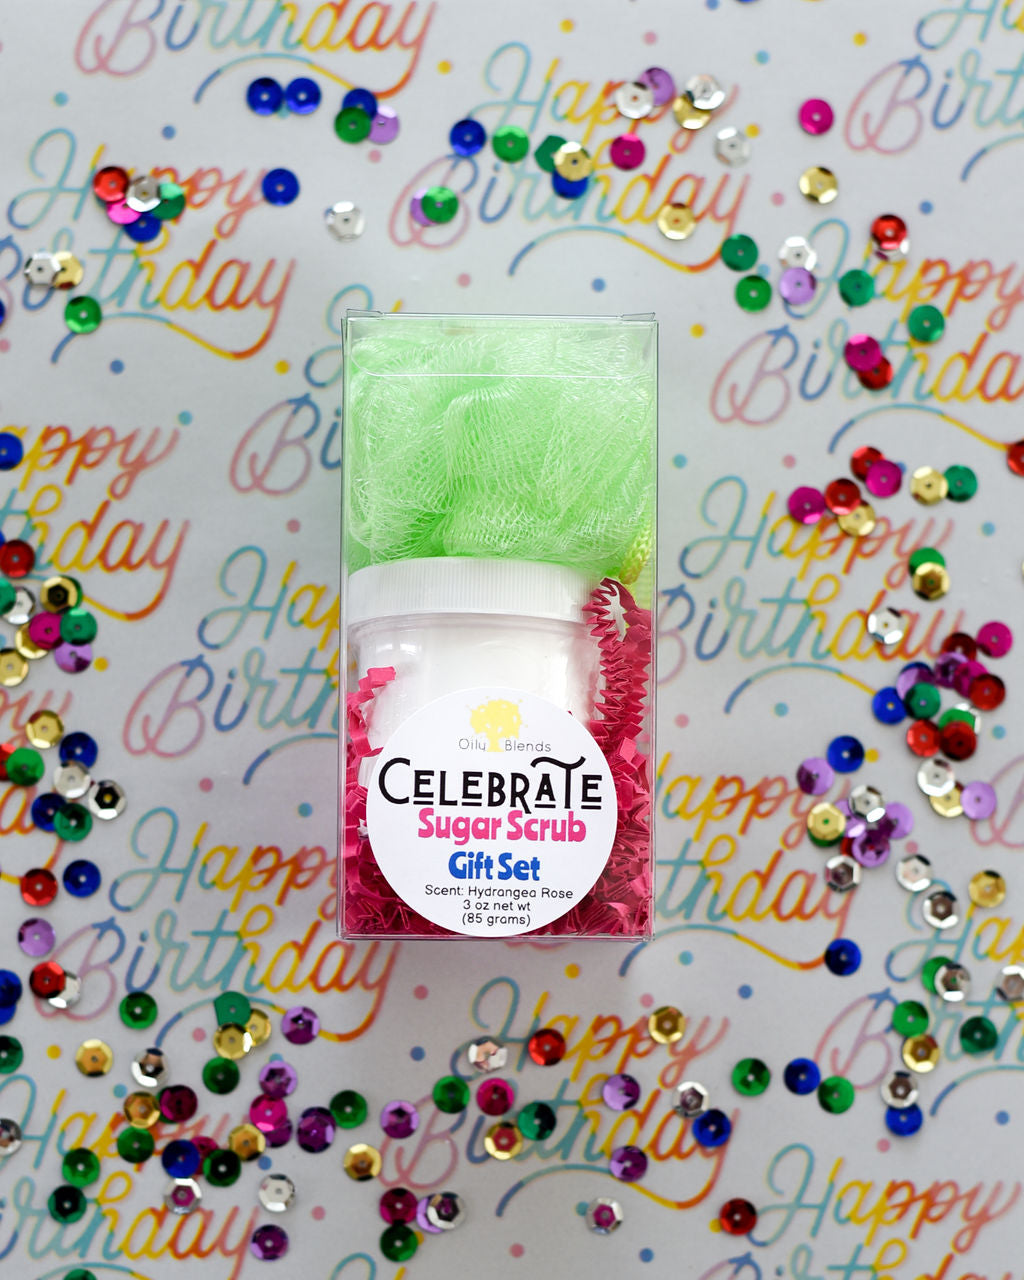 Celebrate Sugar Scrub Gift Sets